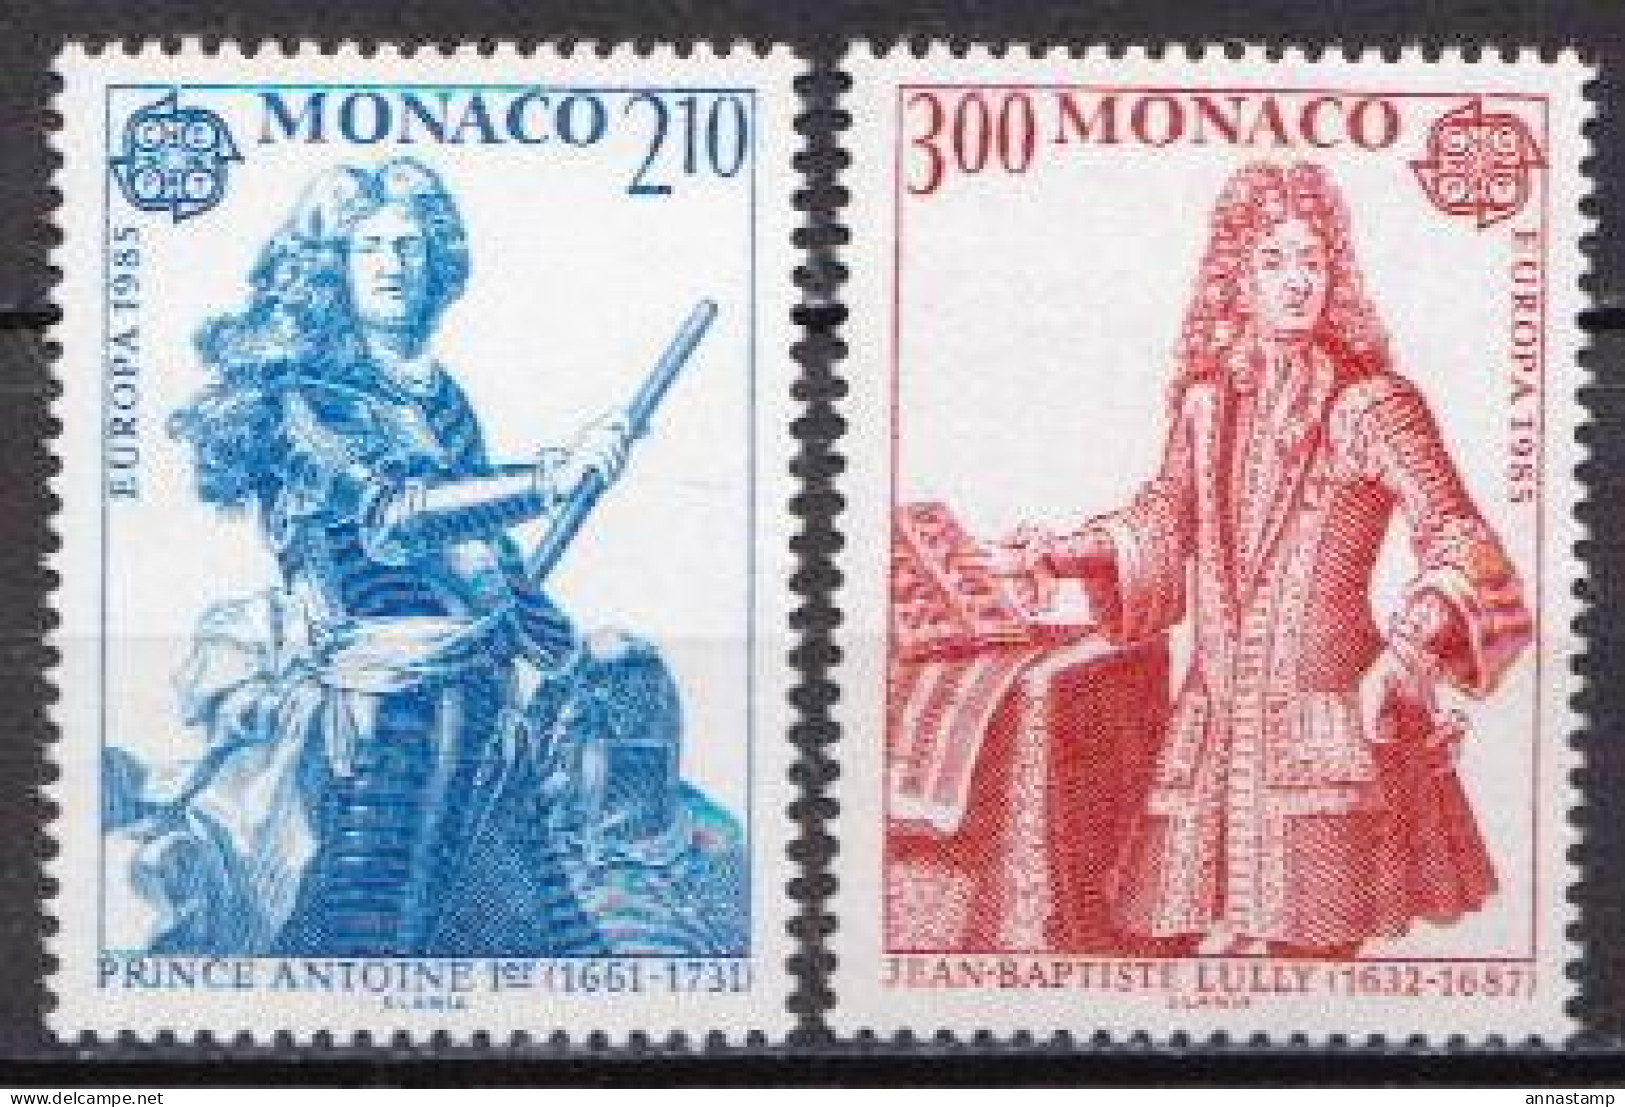 Monaco MNH Set - 1985